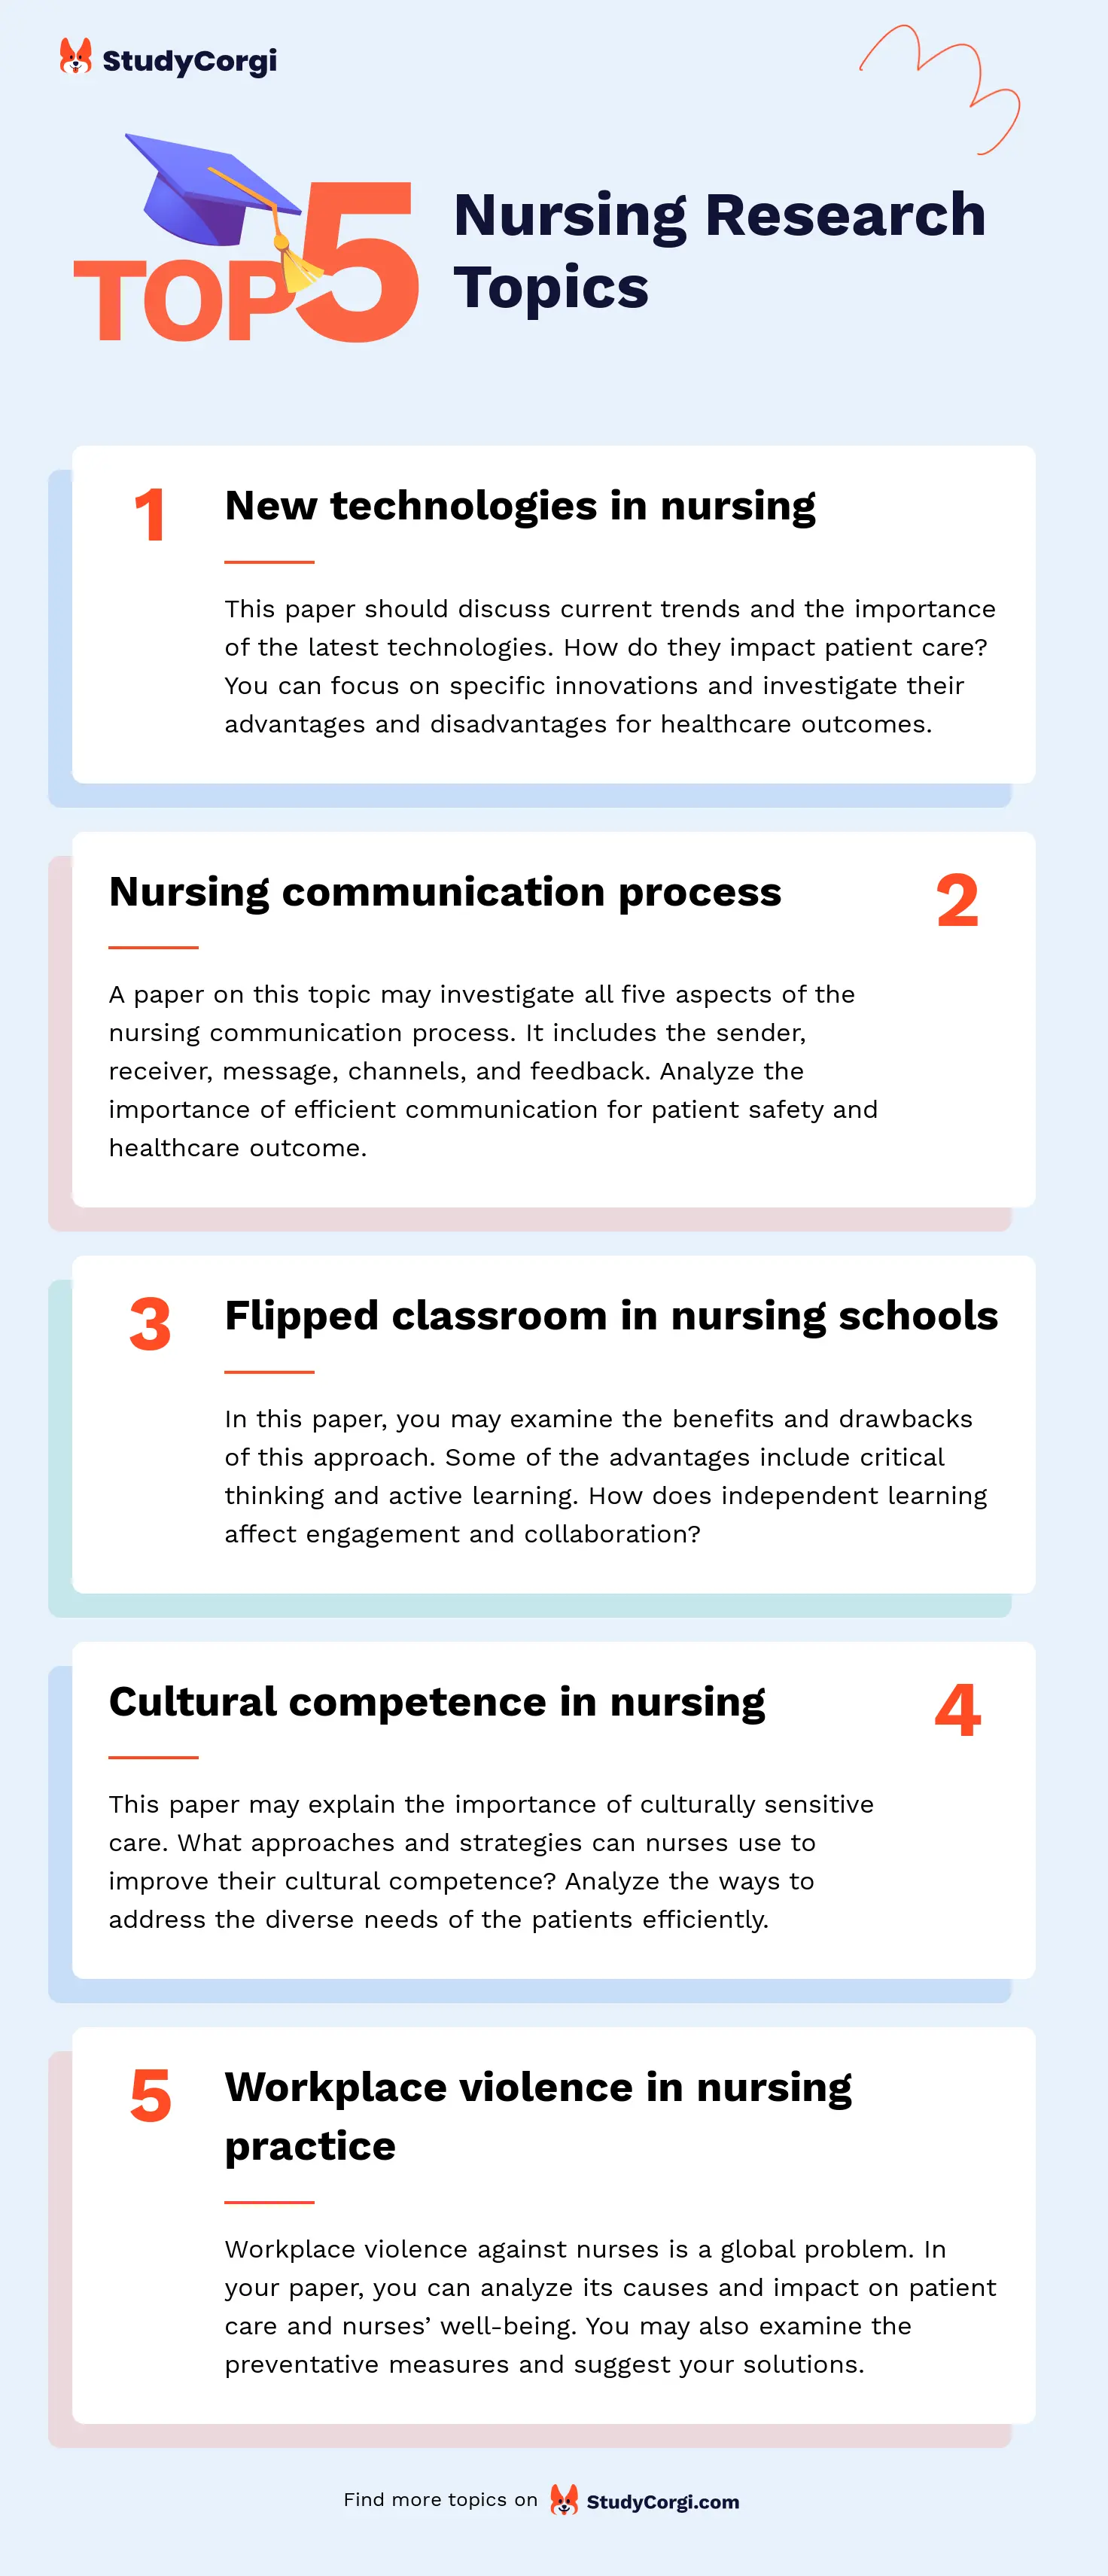 TOP-5 Nursing Research Topics